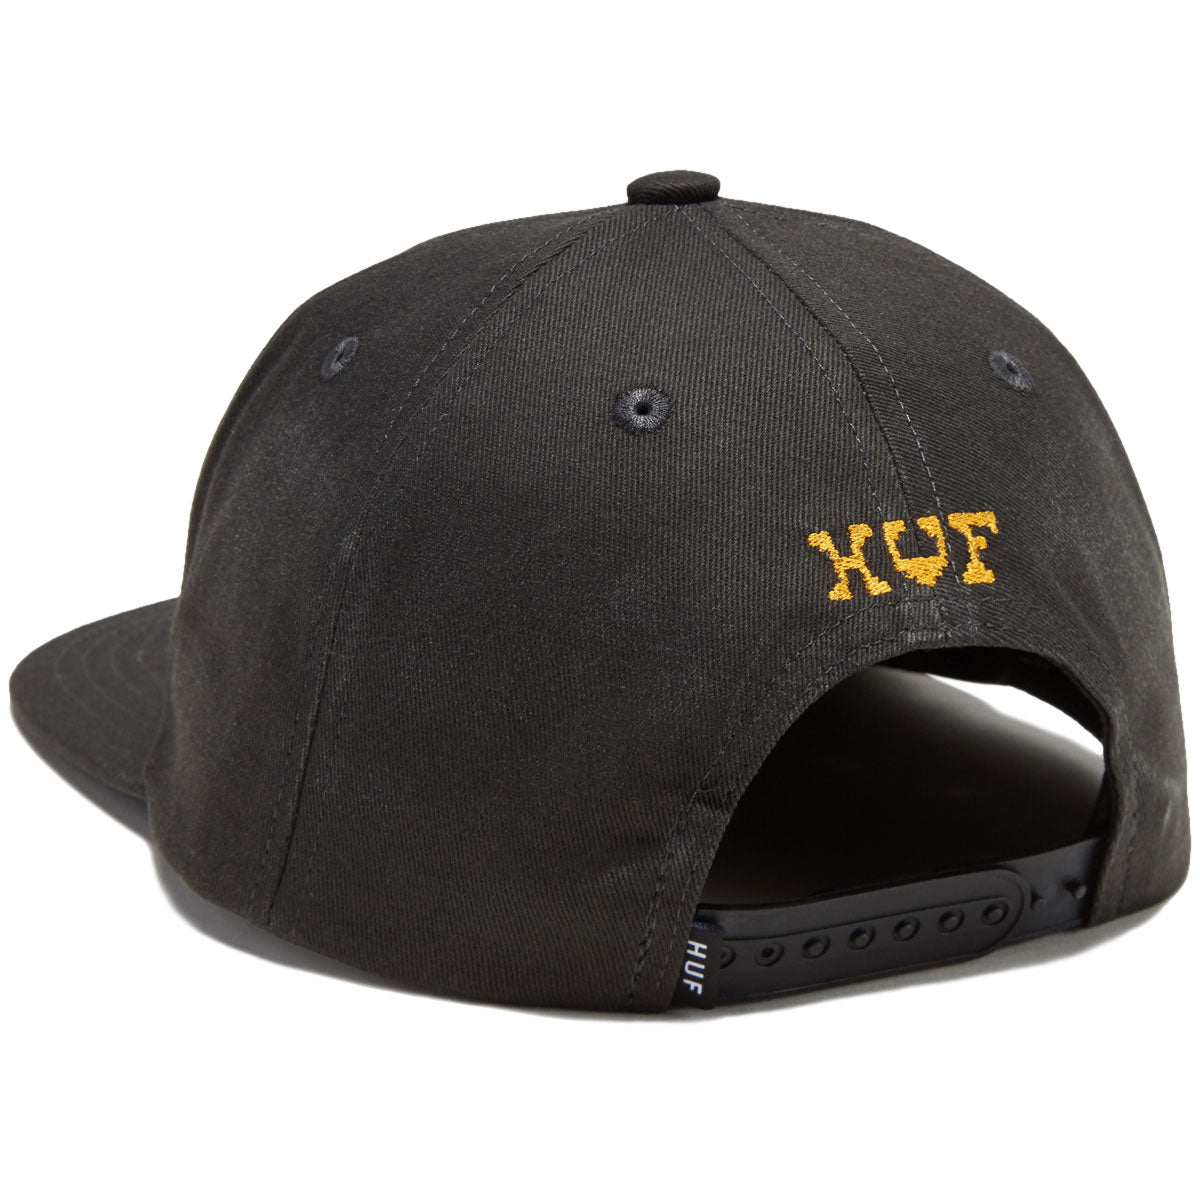 HUF Small Horse Snapback Hat - Black image 2